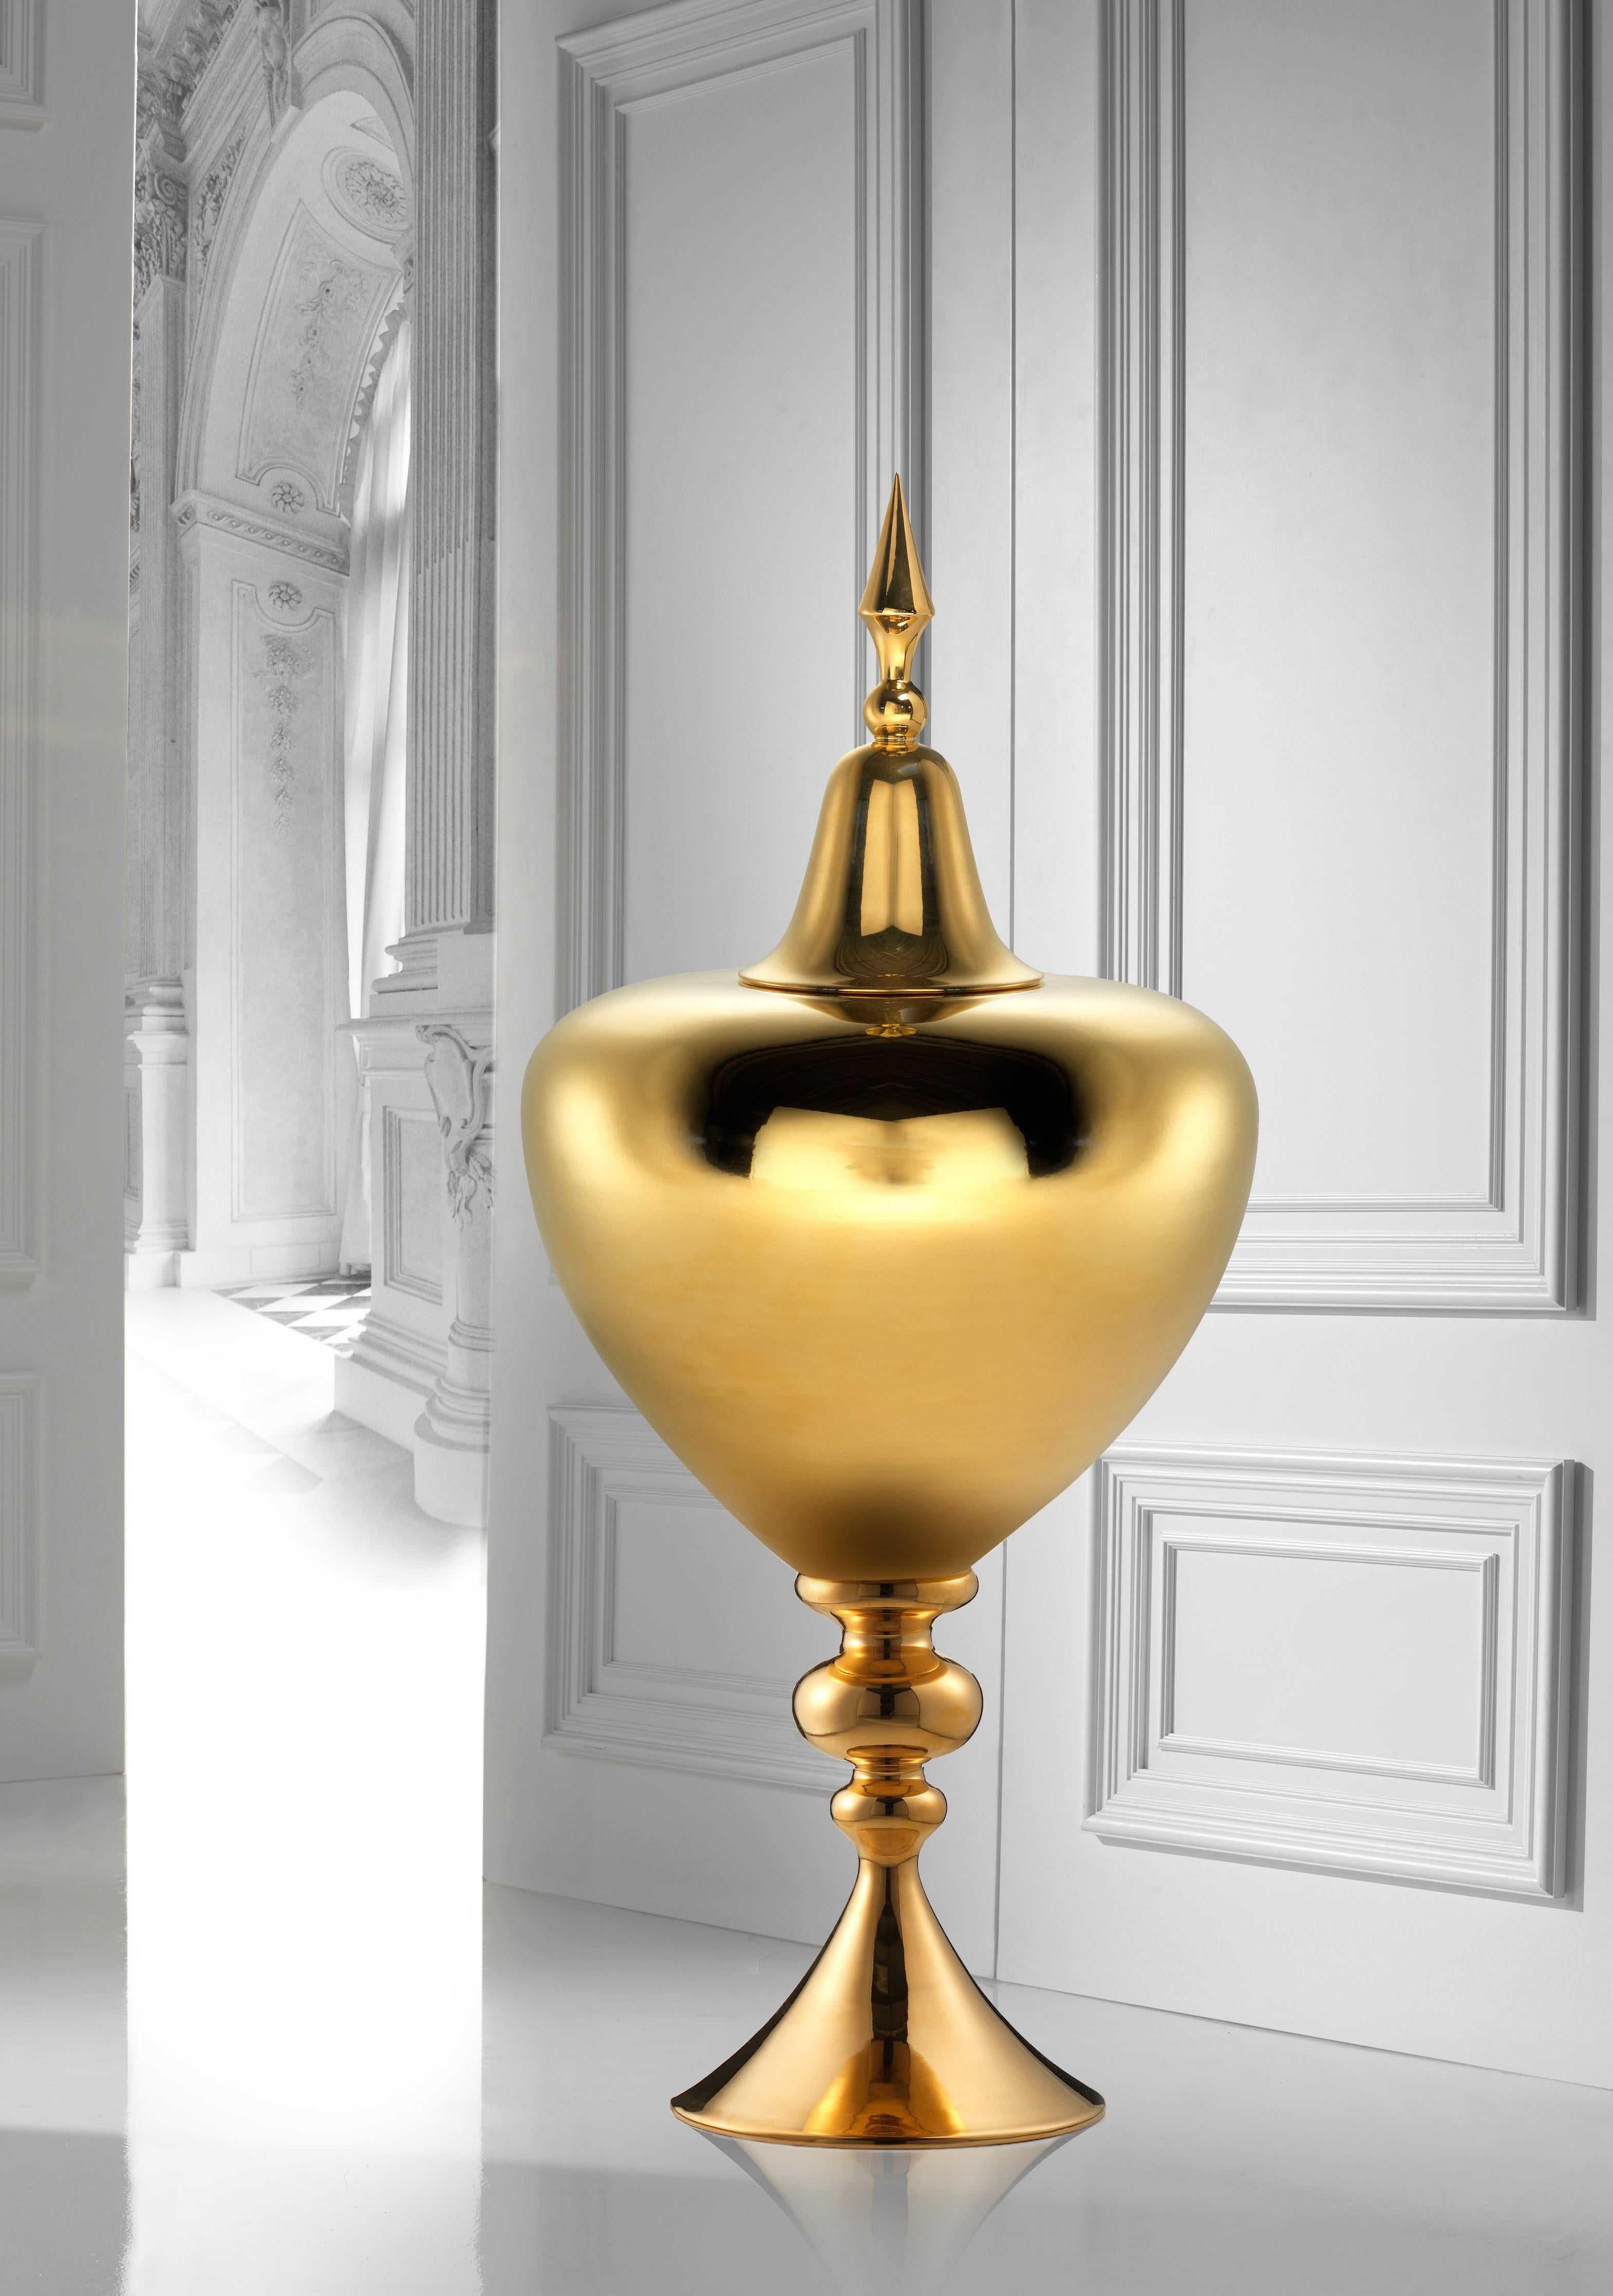 Ceramic vase handcrafted in 24-karat gold.
HARSHA - code VS090
measures: H. 148.0 cm., Dm. 58.0 cm.